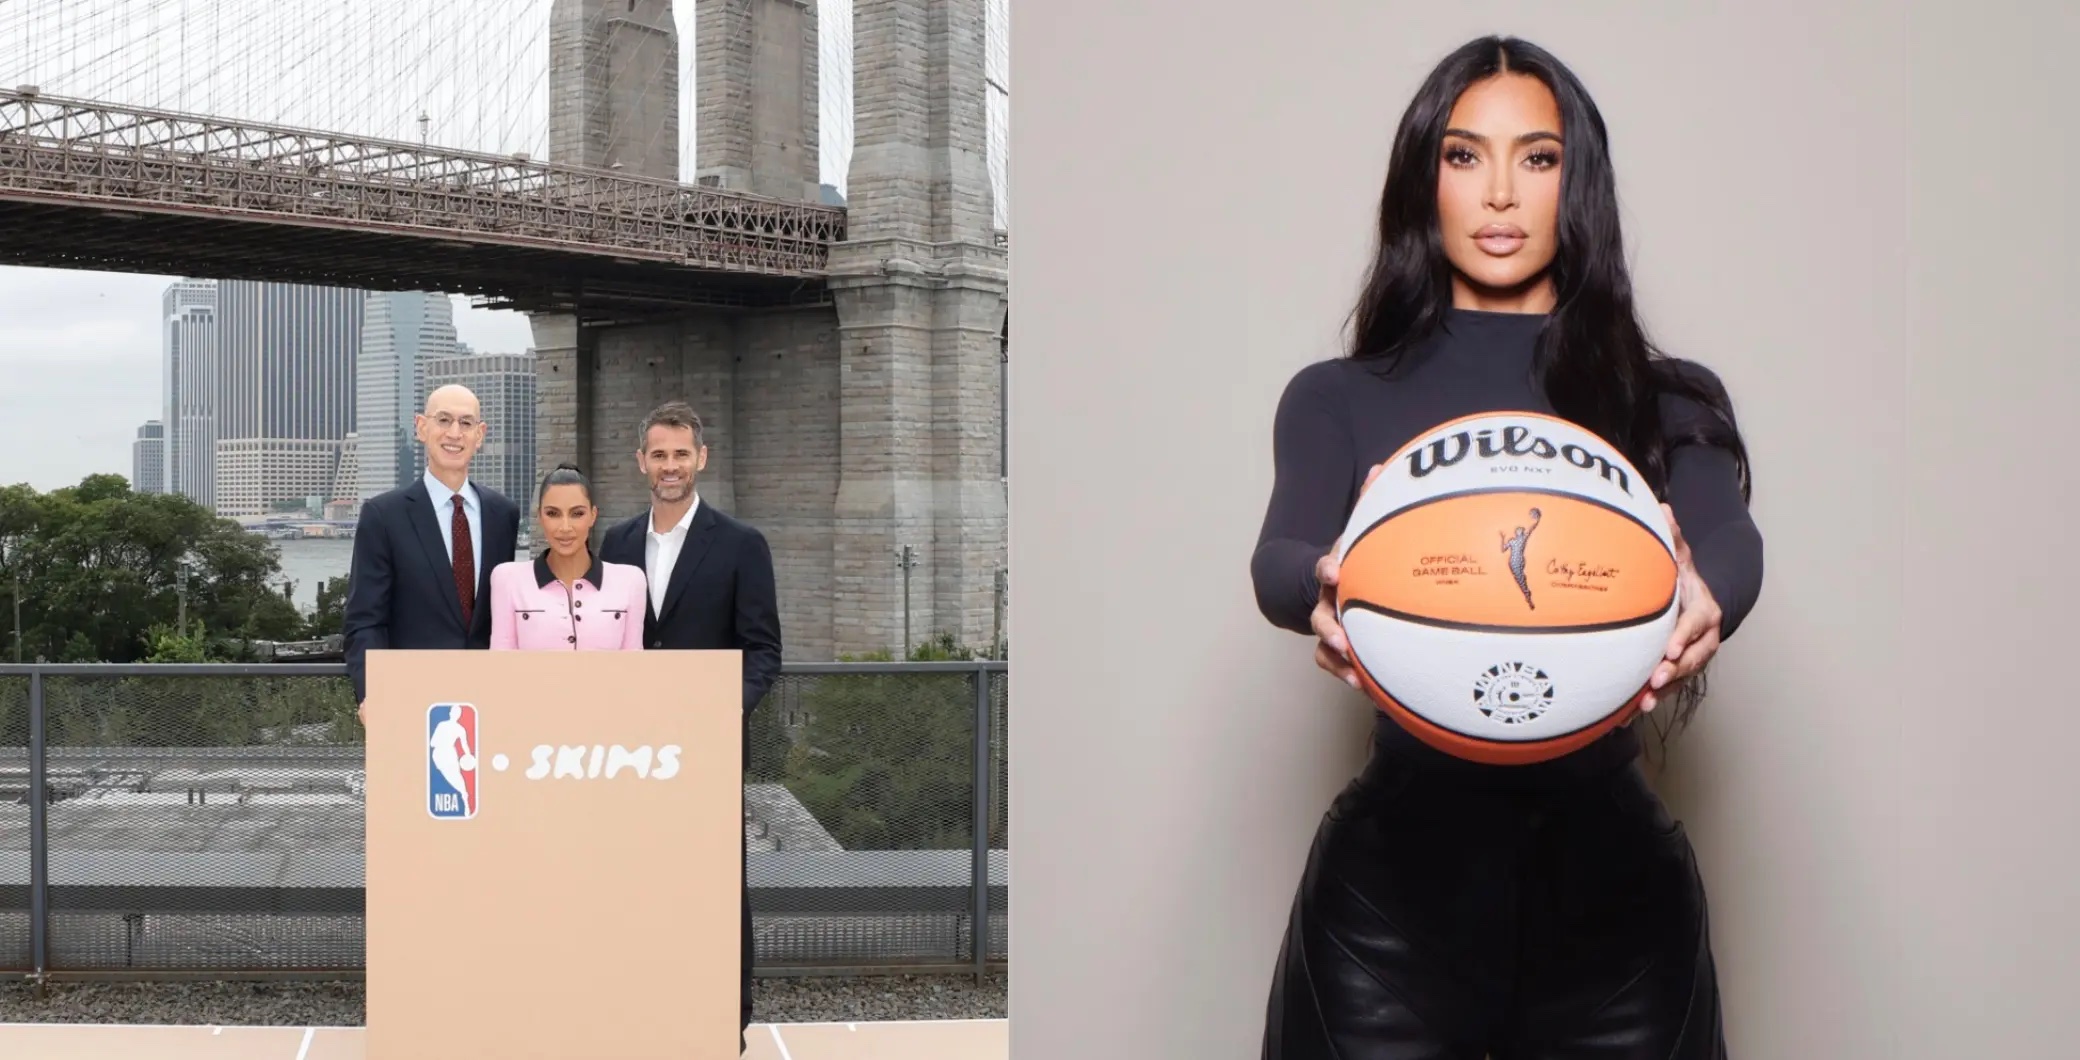 Kim Kardashian's $4 billion 'Skims' brand logo advertised on Lakers and  Bucks court